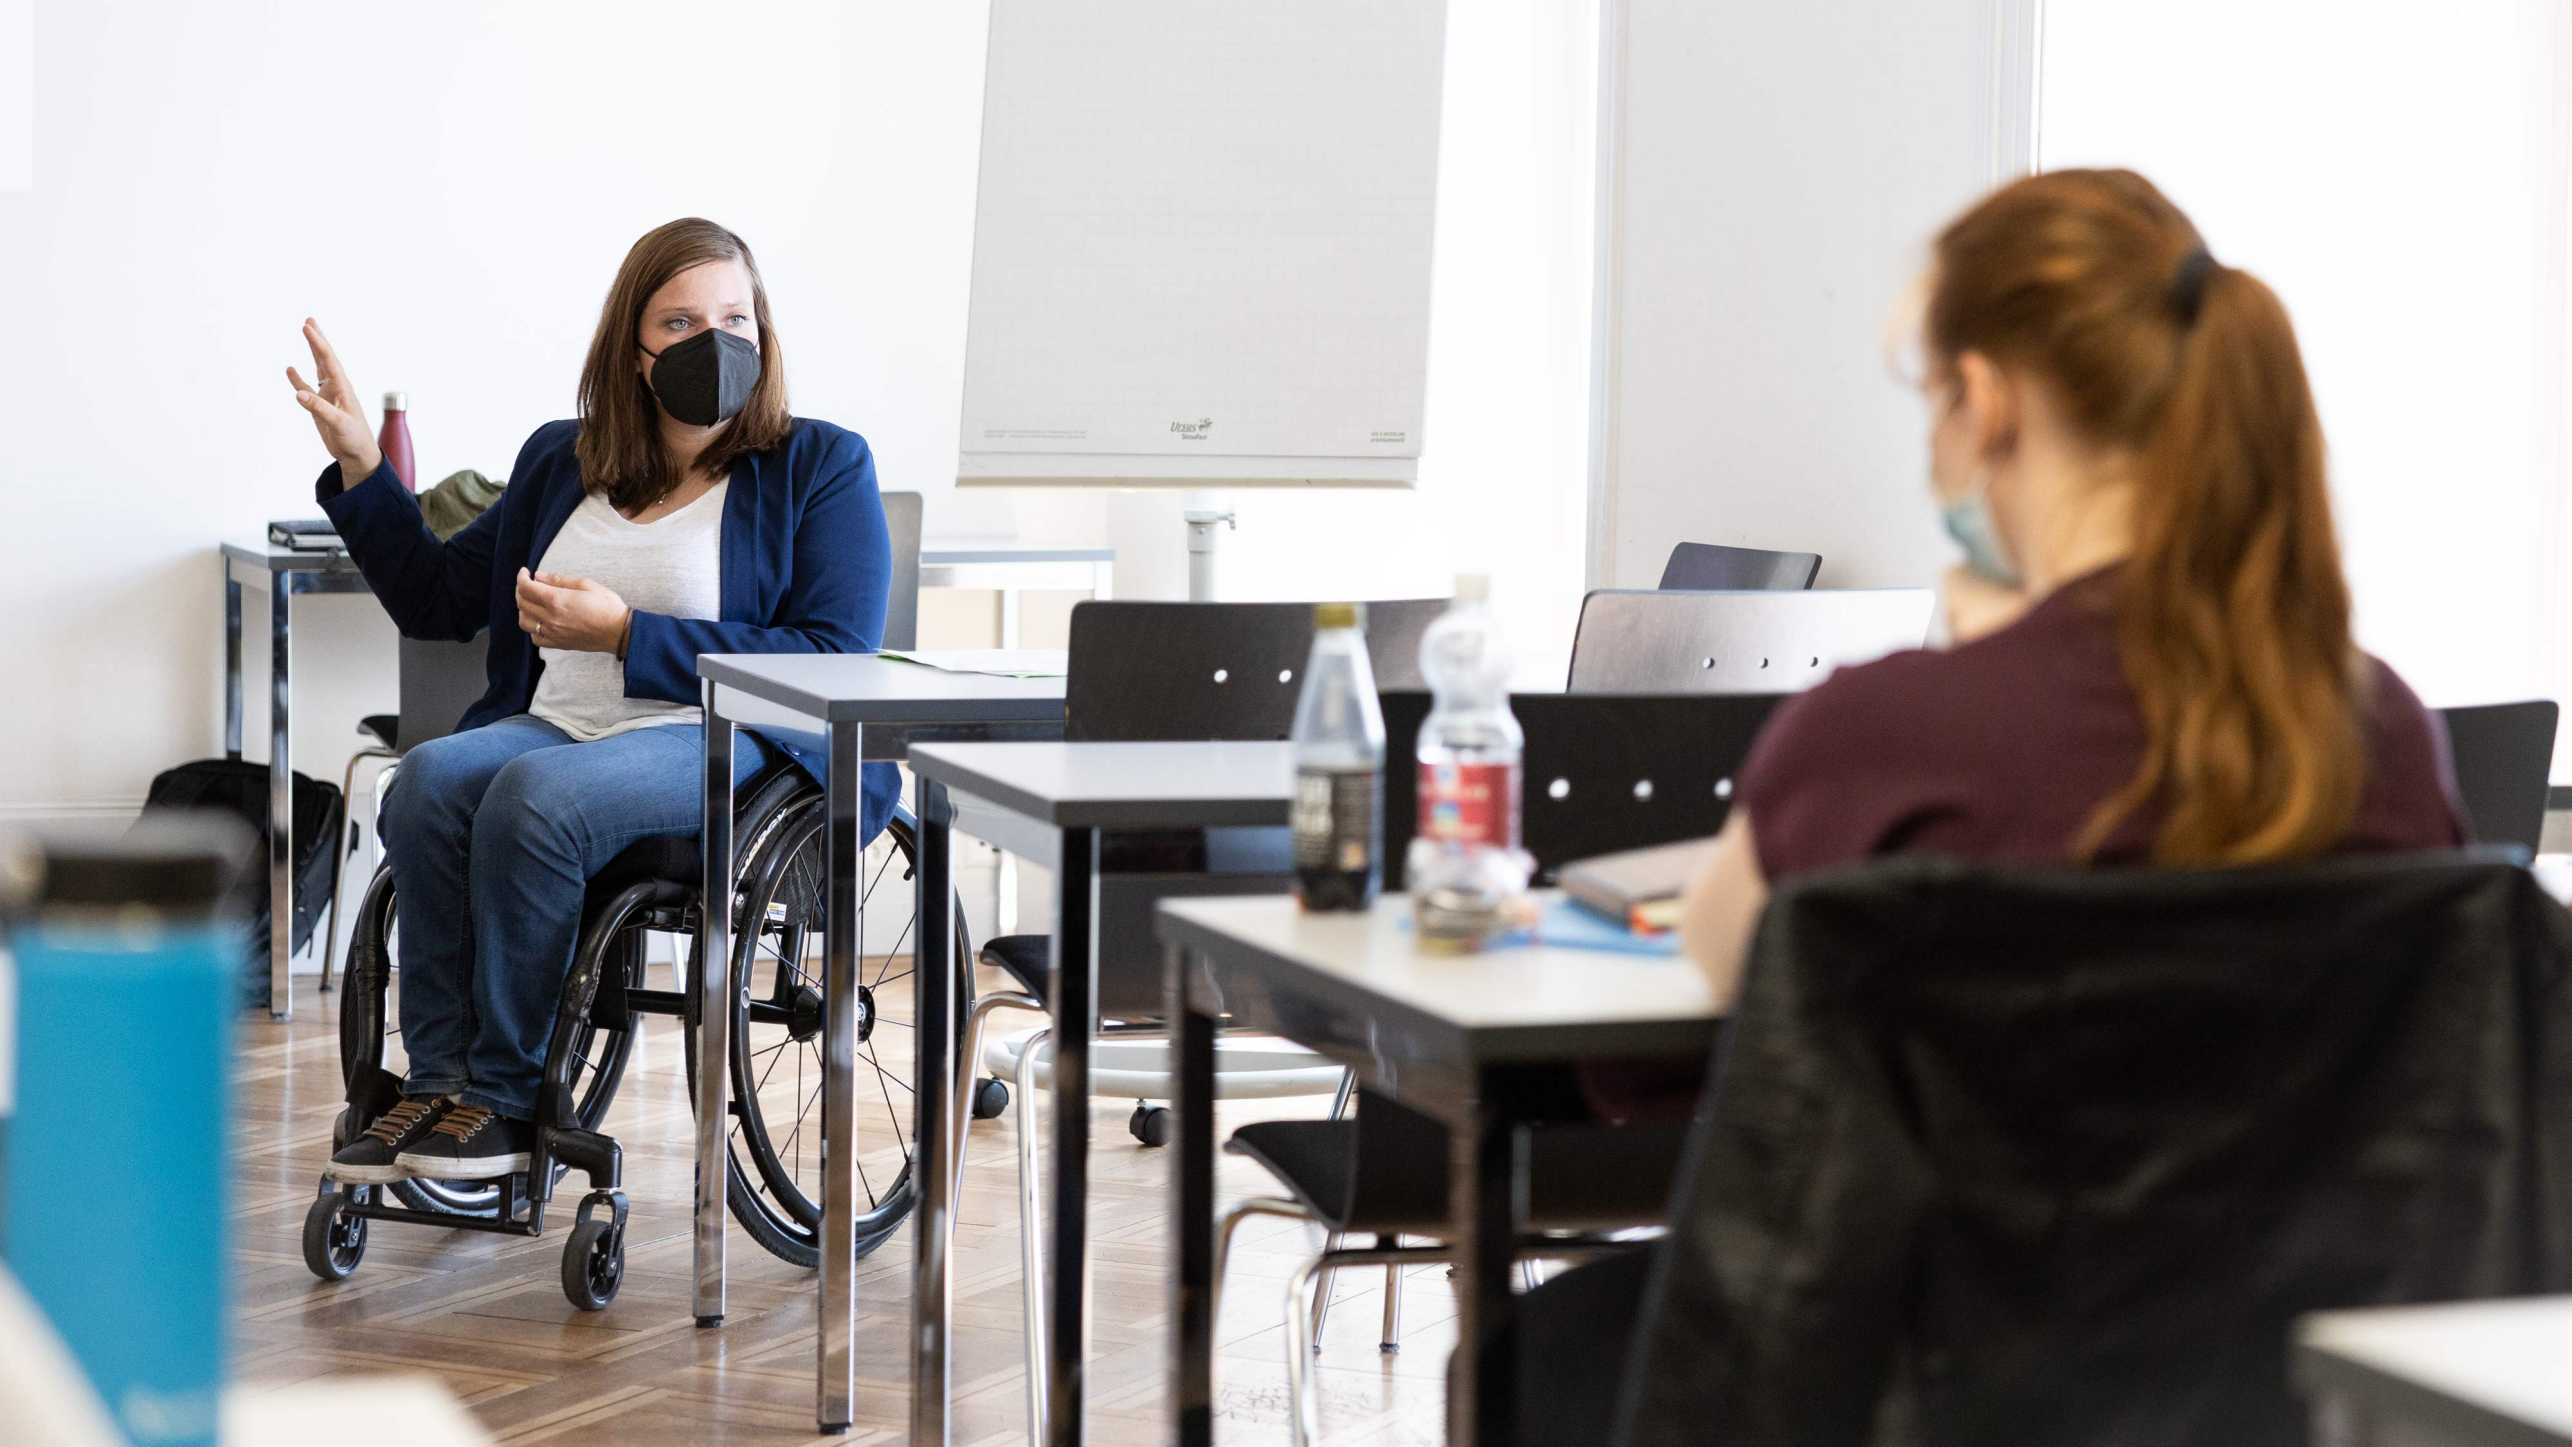 Enlarged view: Andrea von Büren in Wheelchair talking in front of class